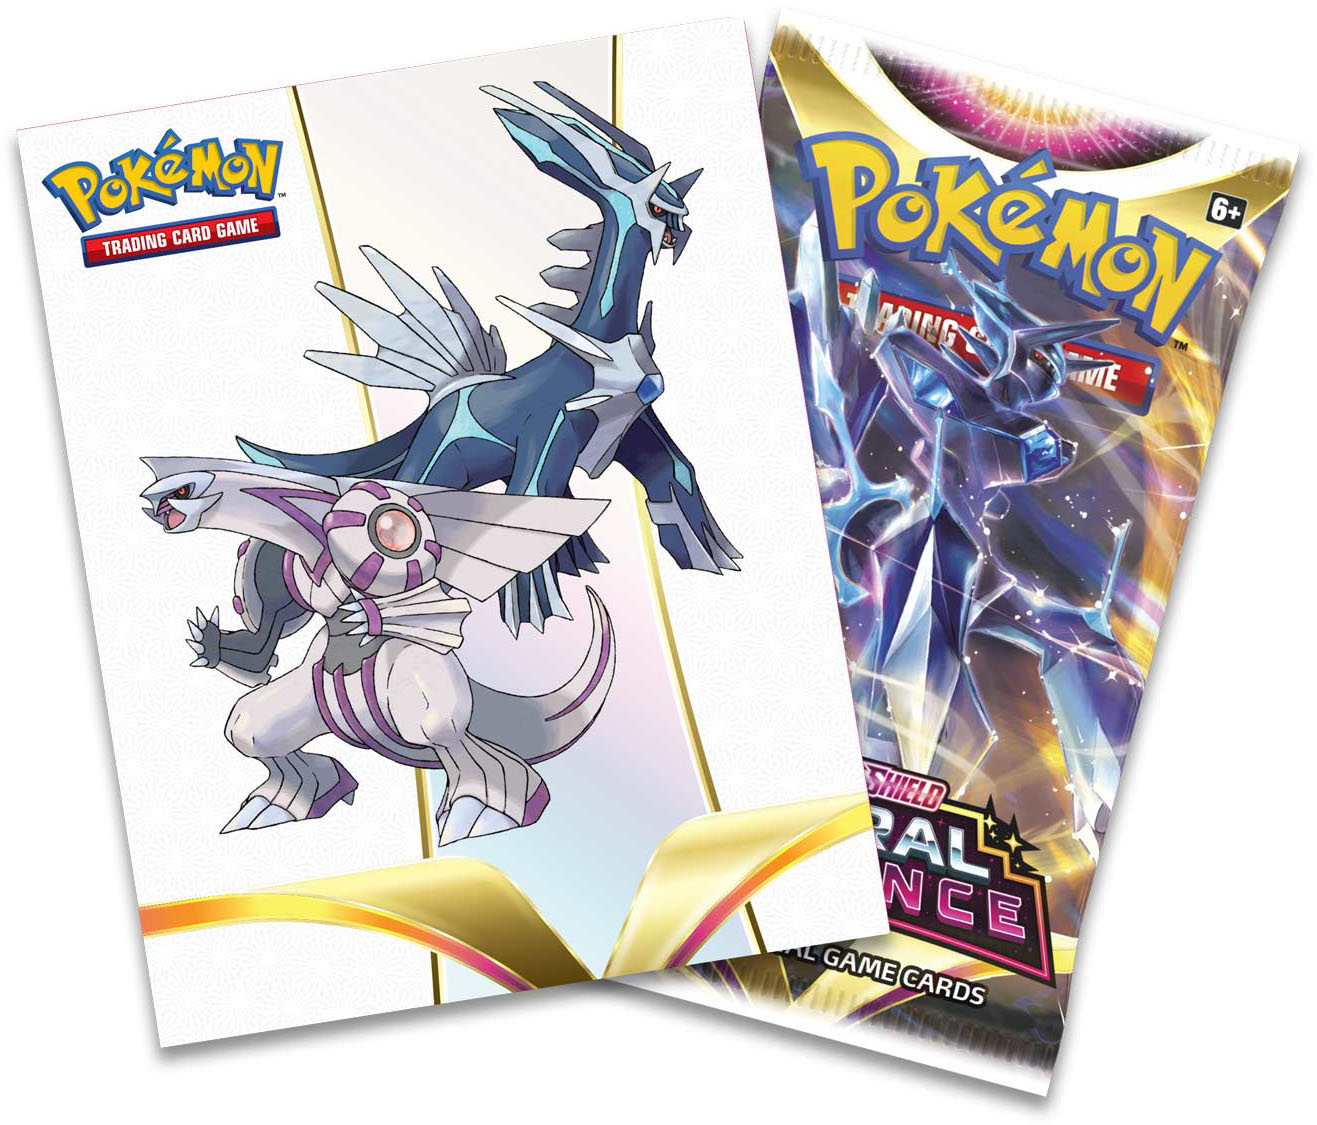 Pokémon - Pacote 10 Cartas Astral Radiance (Vários modelos